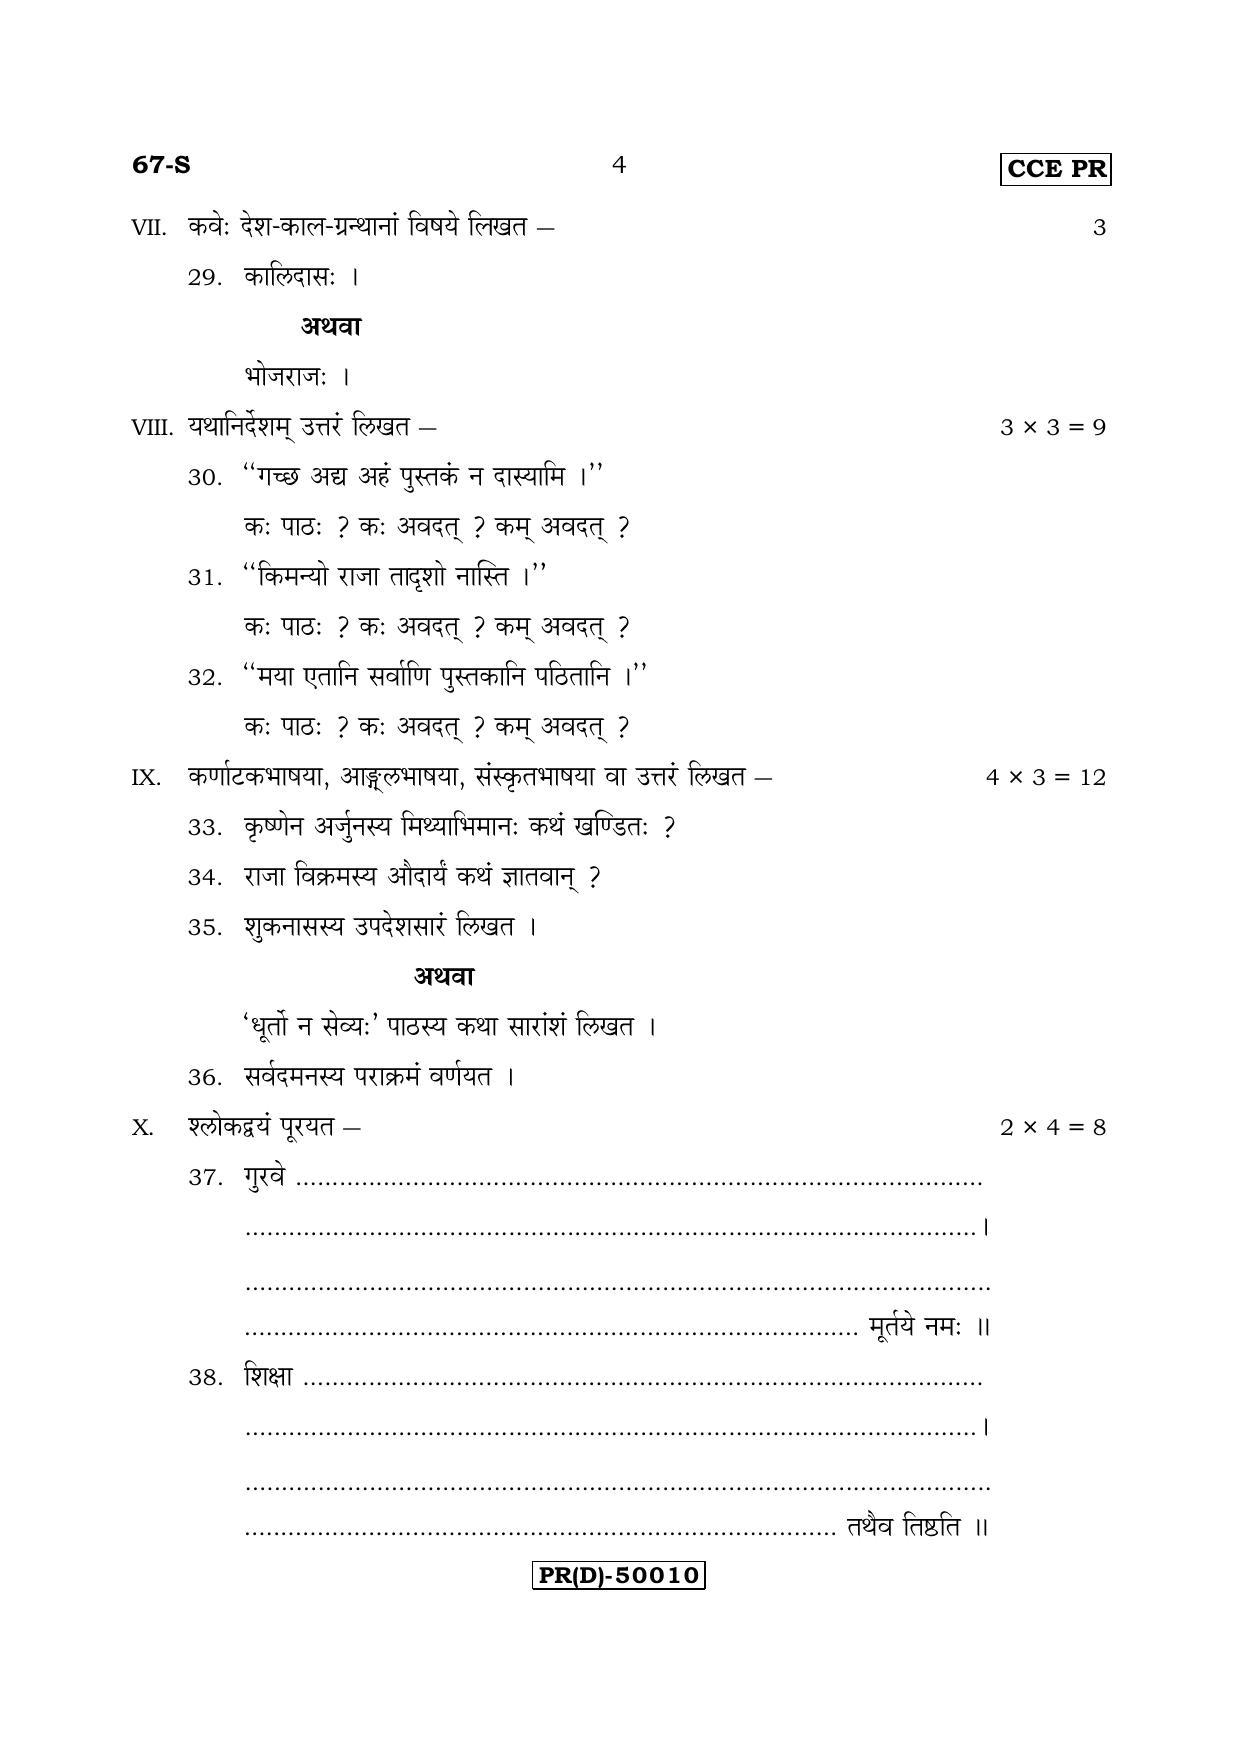 Karnataka SSLC Sanskrit - Third Language - SANSKRIT (67-S-(PR) (UN-Revised)_318) (Supplementary) June 2018 Question Paper - Page 4